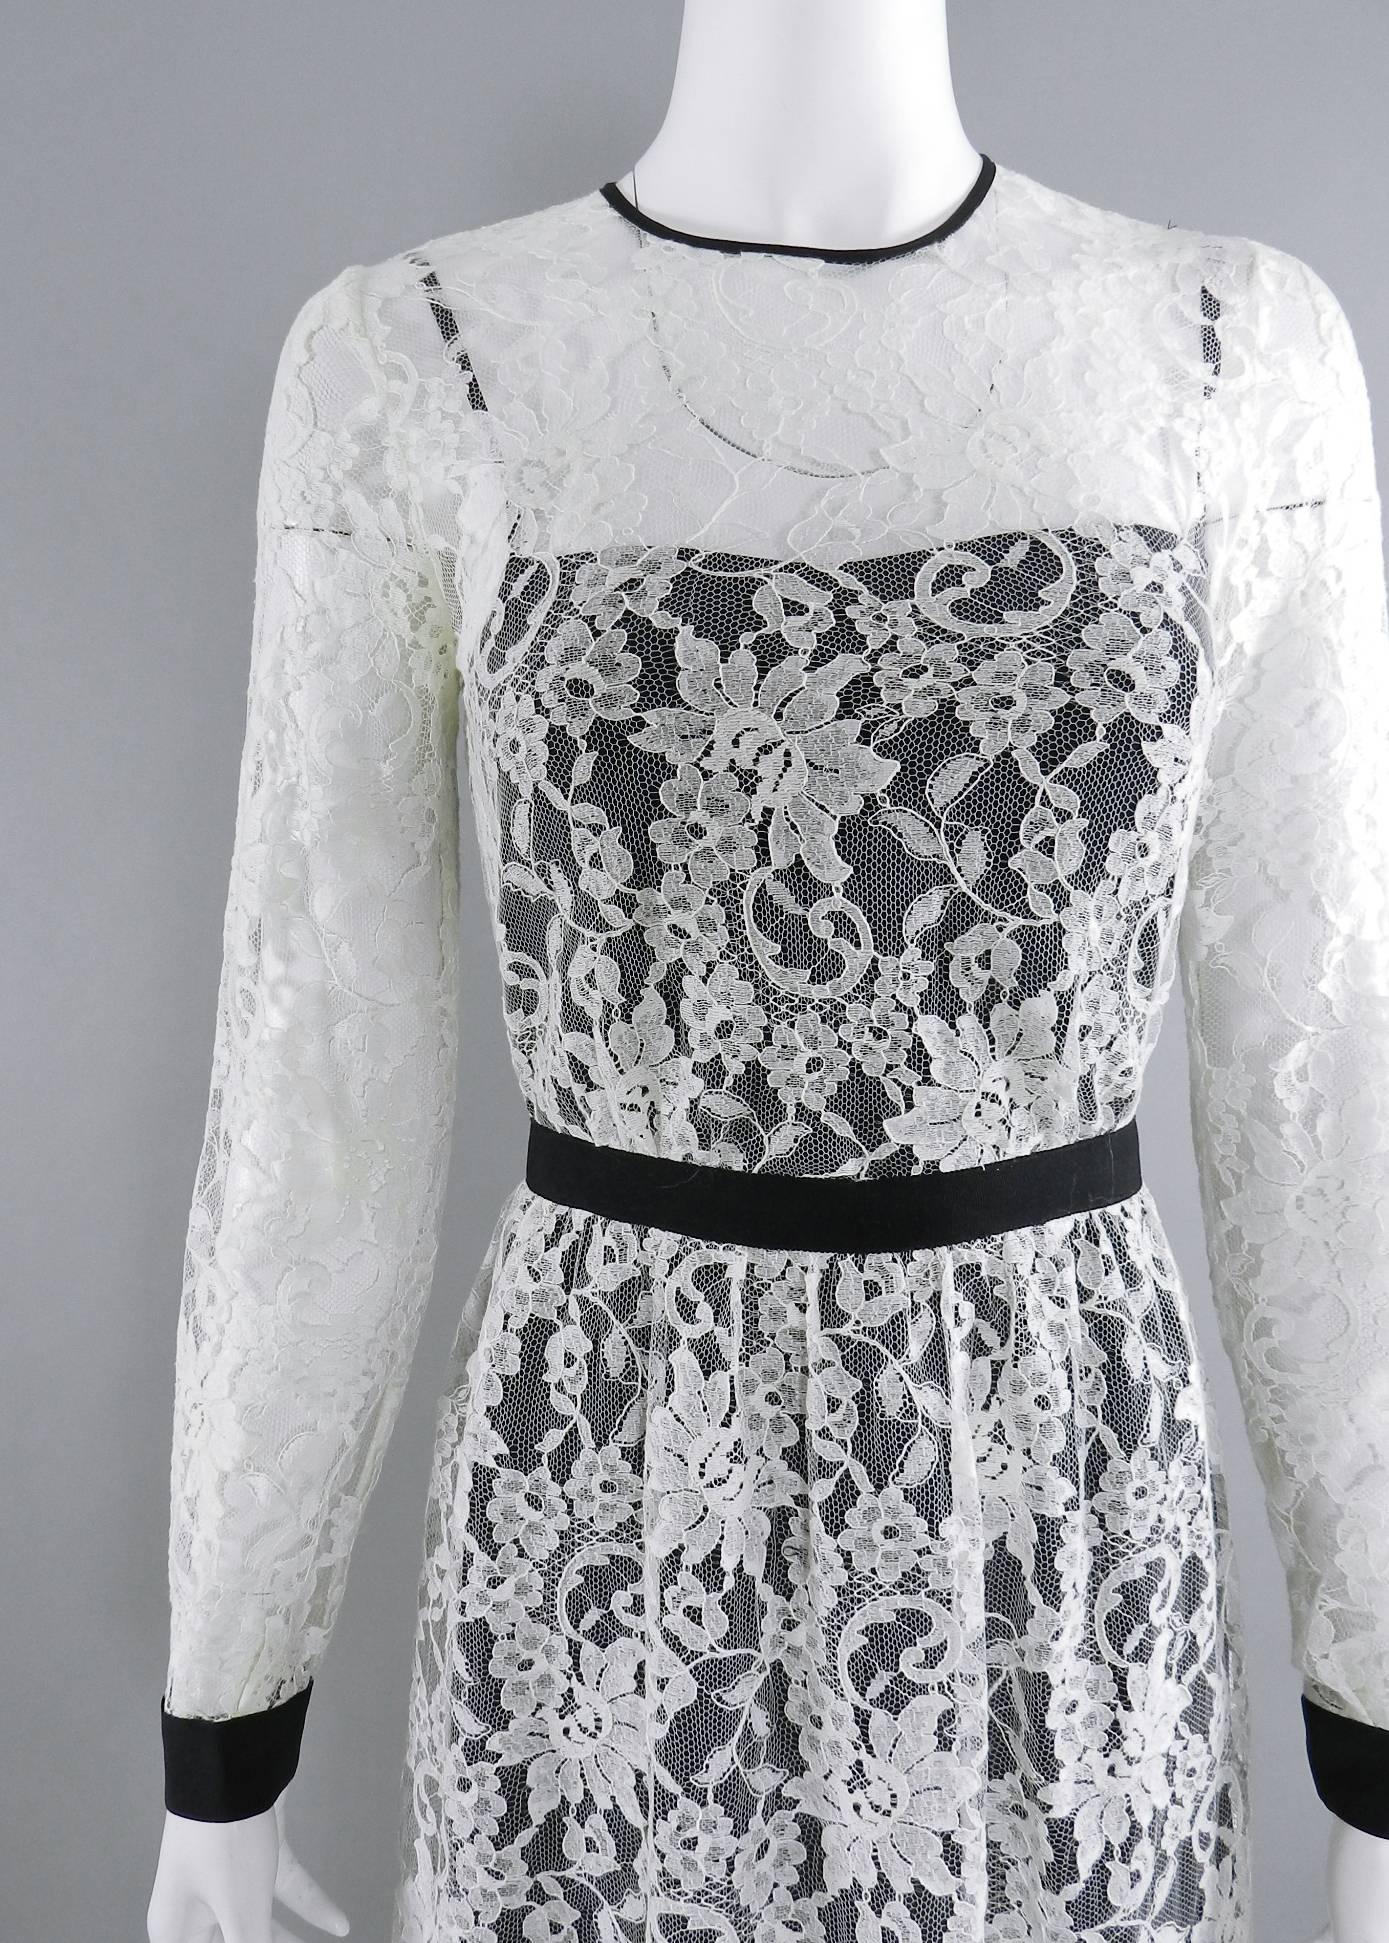 Women's Erdem resort 2014 White Lace 1950s style Dress